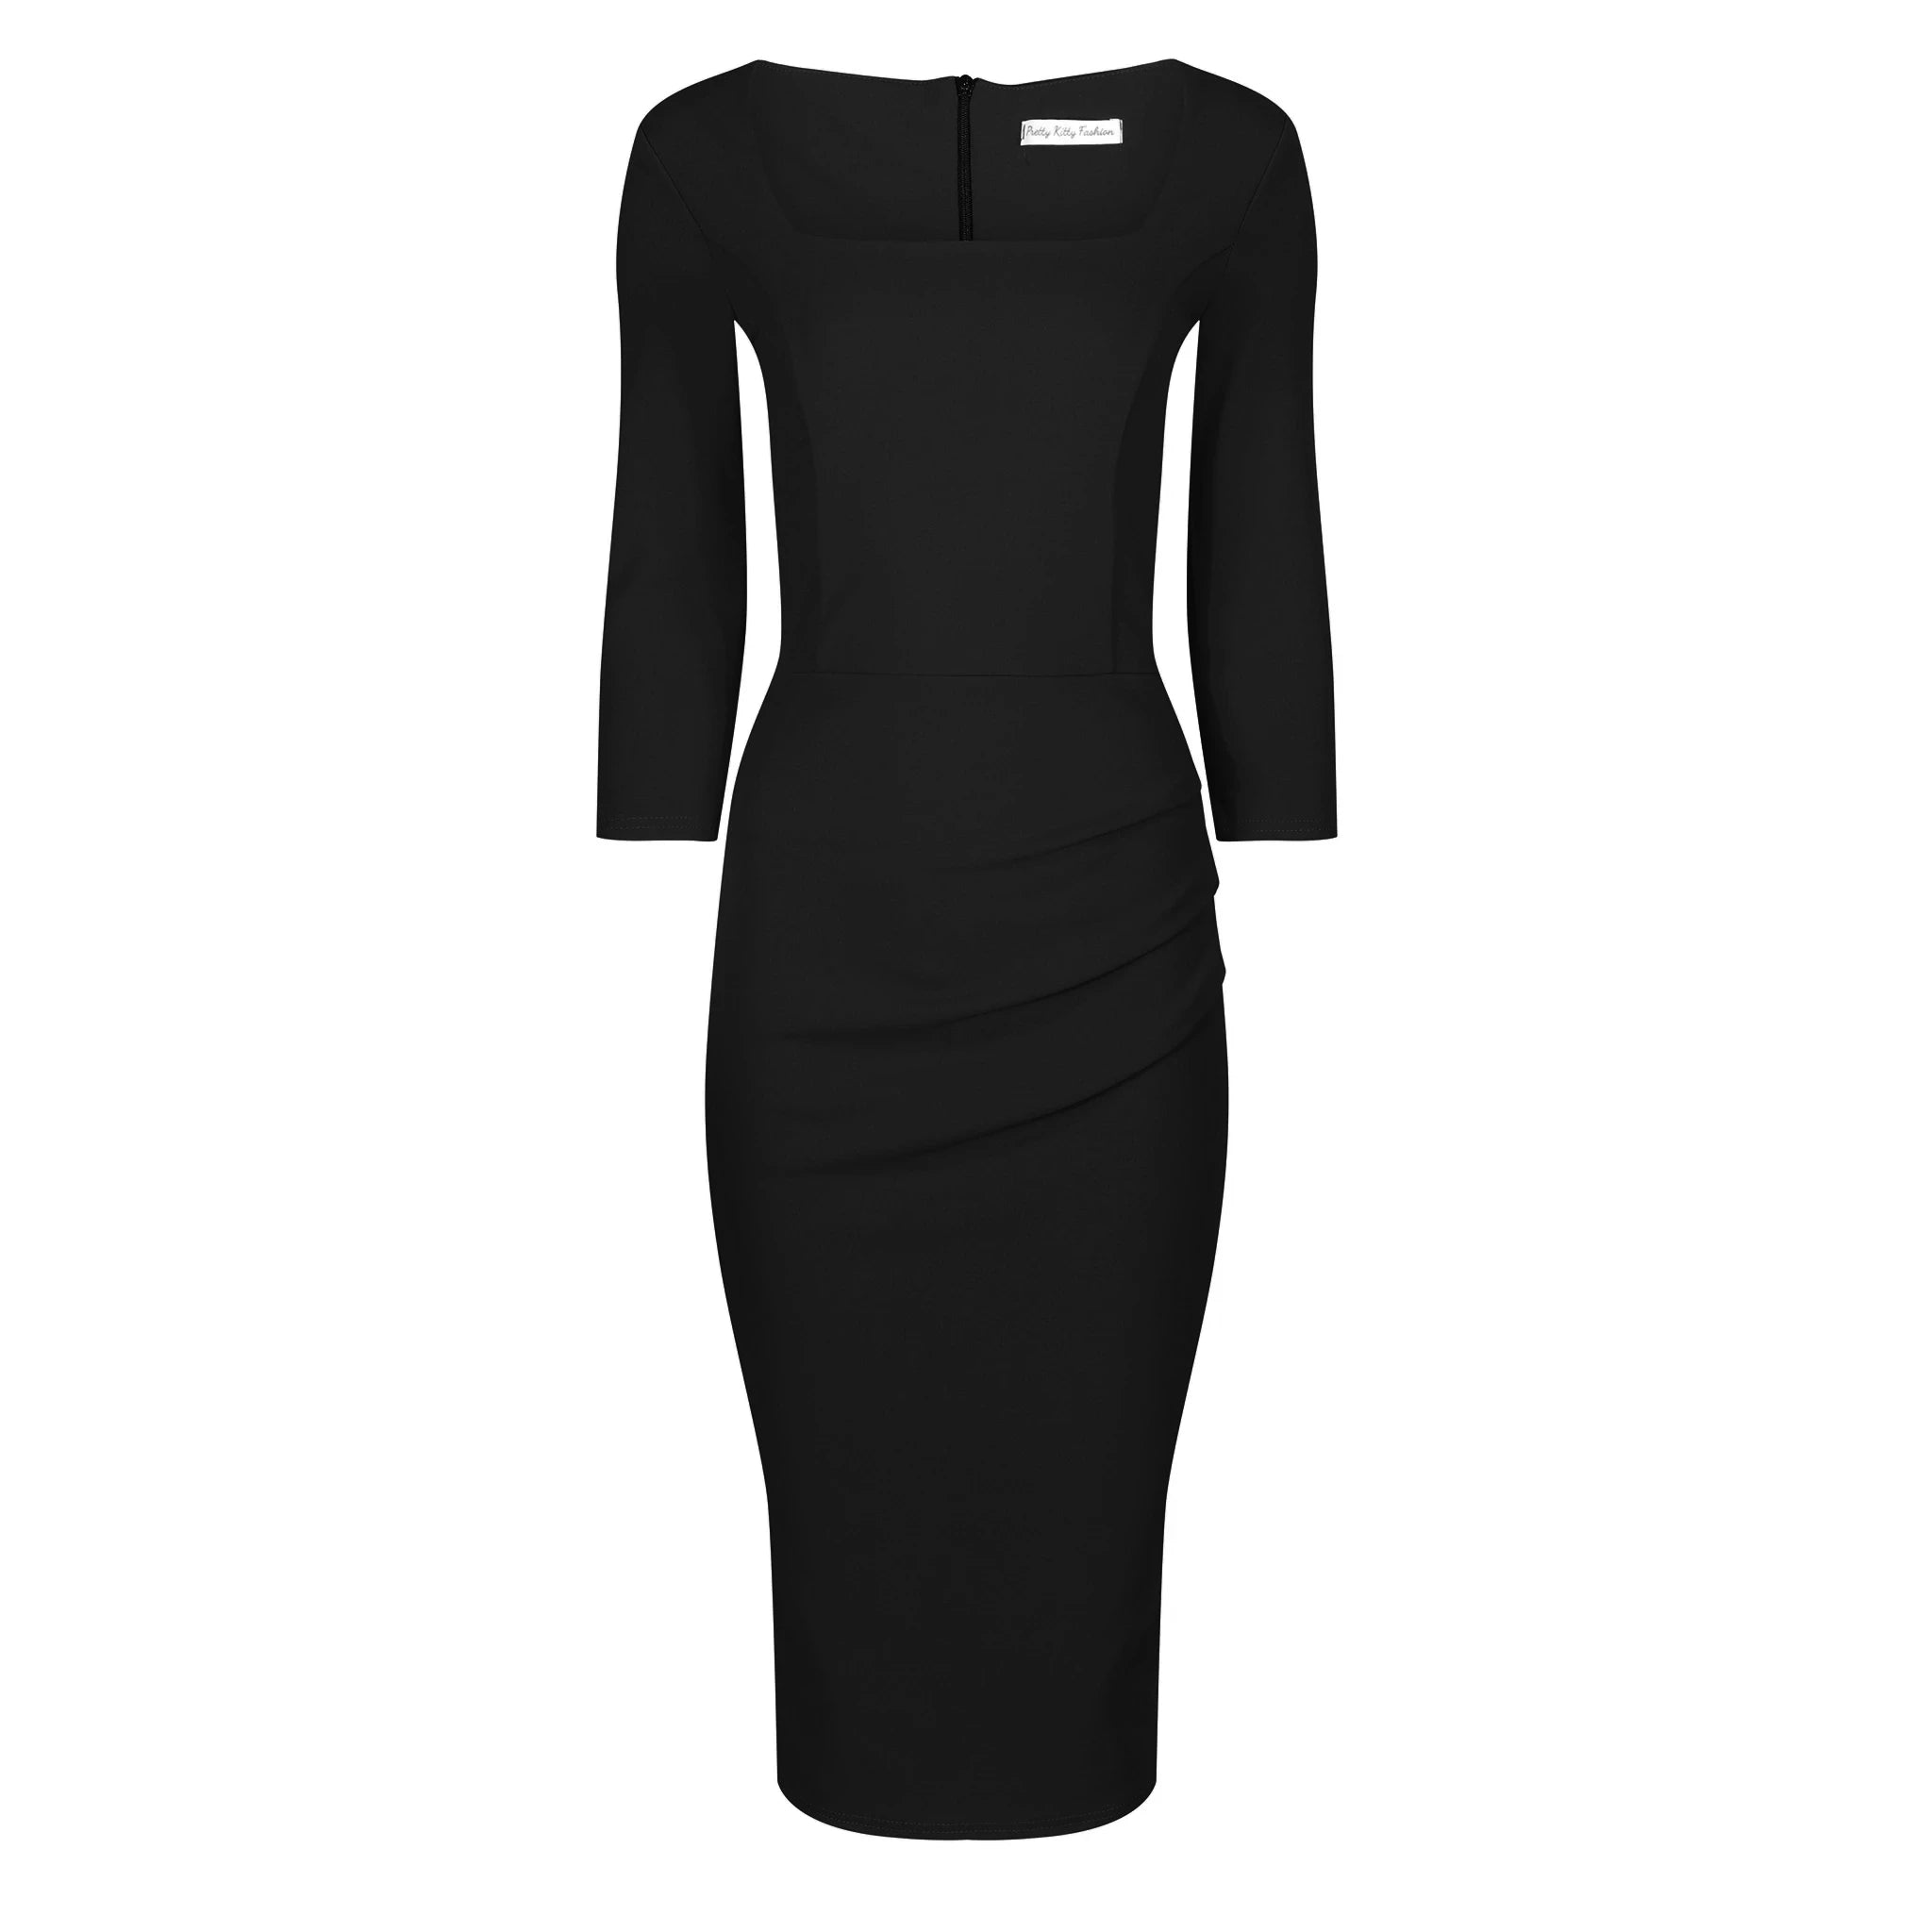 Black 3/4 Sleeve Square Neckline Wiggle Pencil Dress